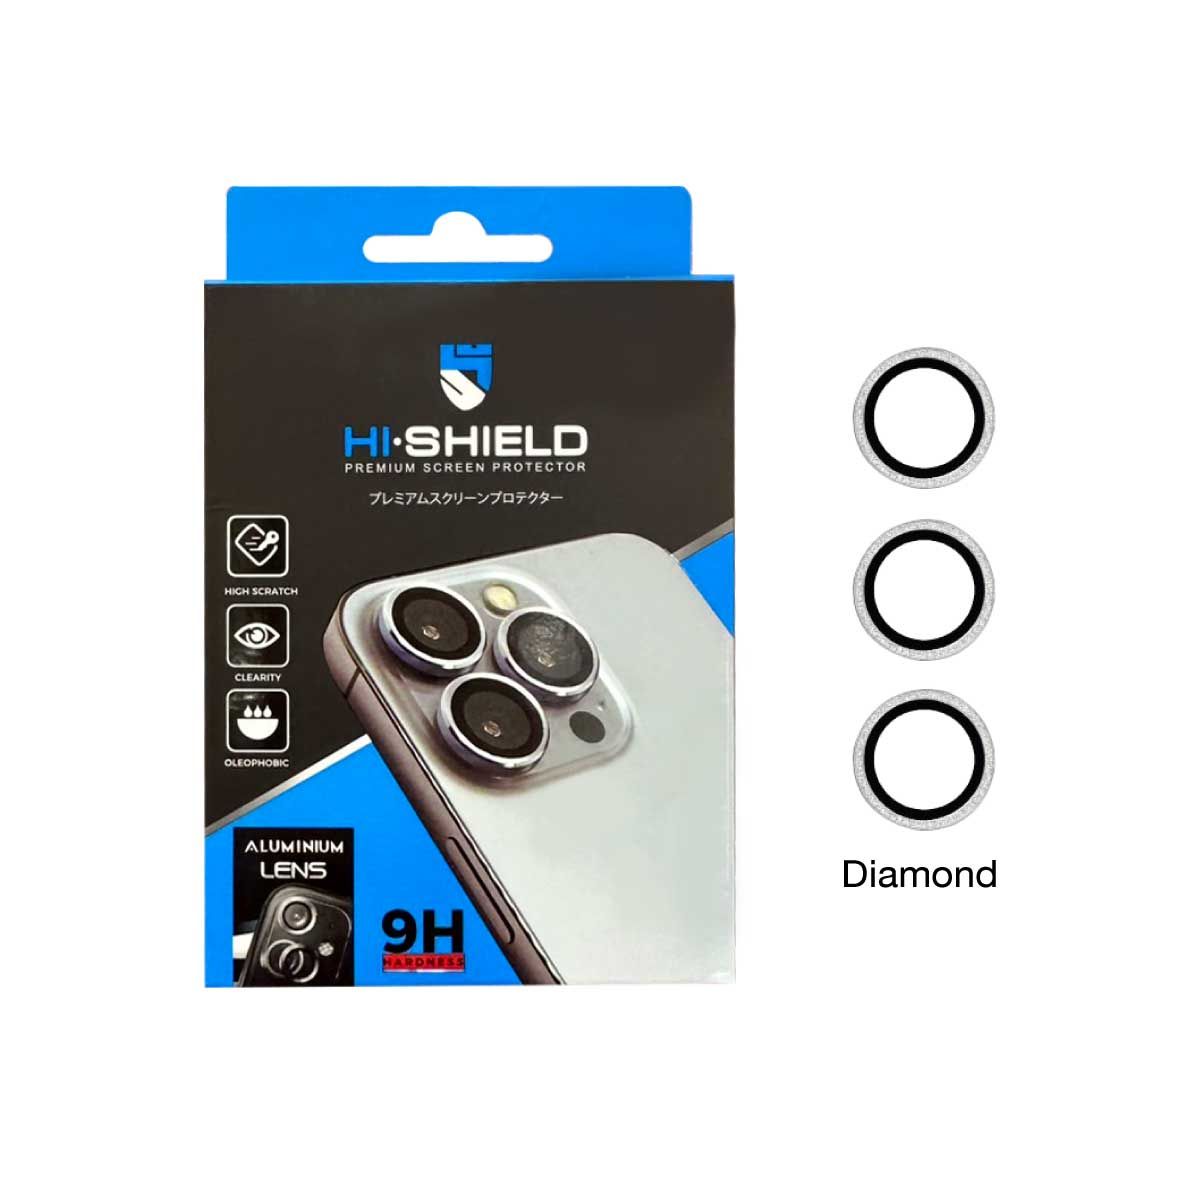 HISHIELD Aluminium Lens Diamond iPhone 15Pro/ProMax